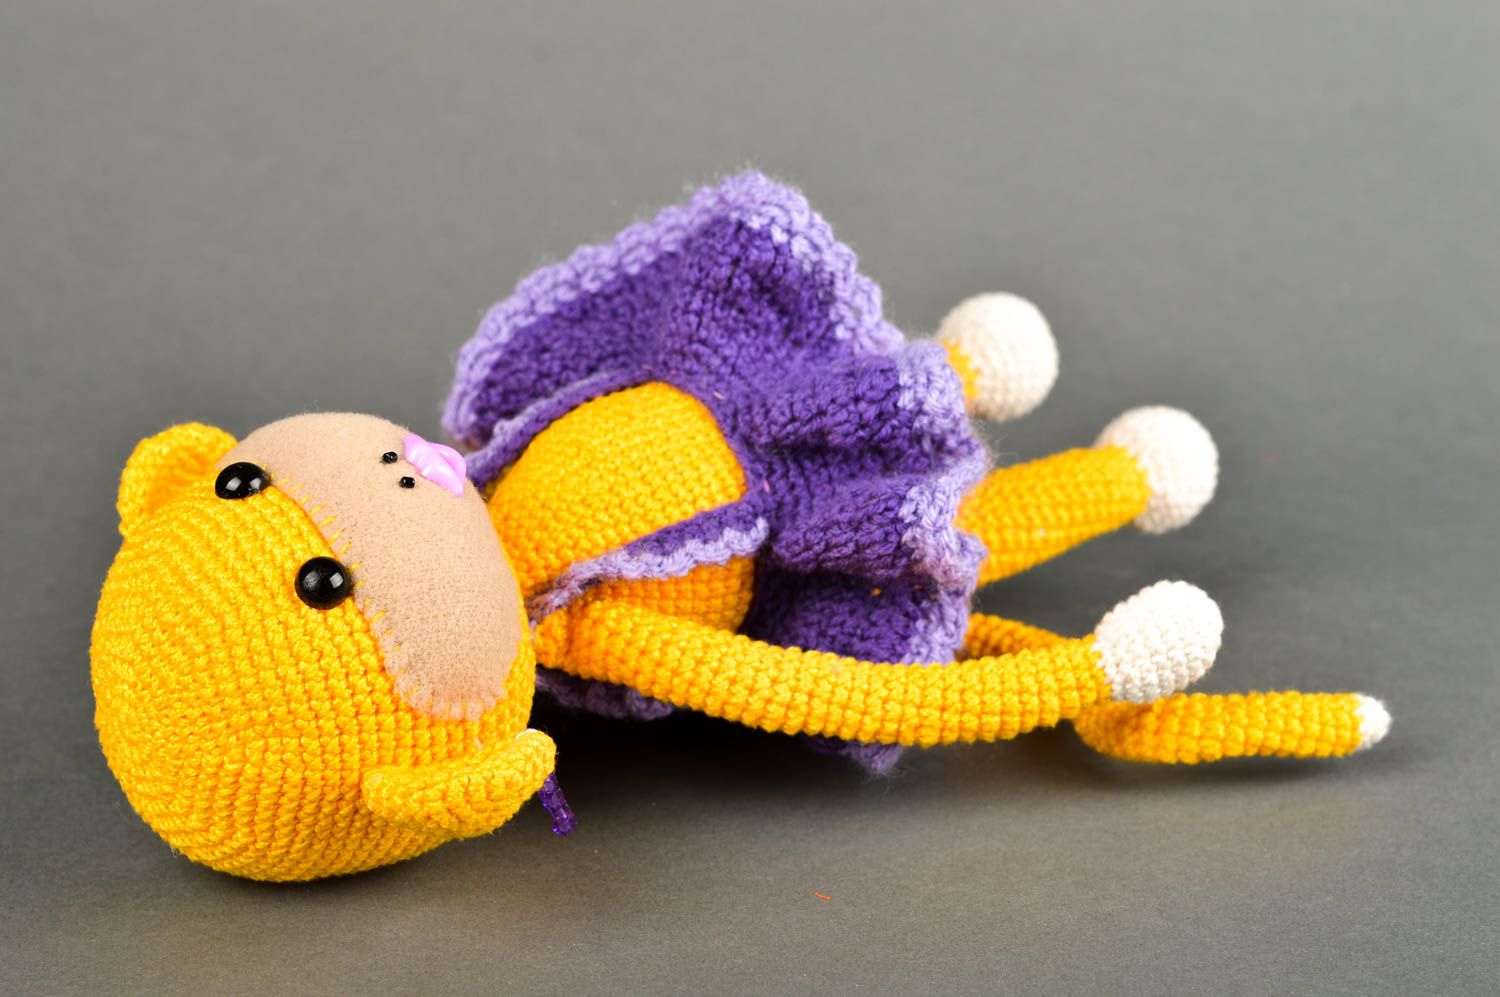 Handmade crocheted toys creative toys for children designer toys nursery decor photo 4